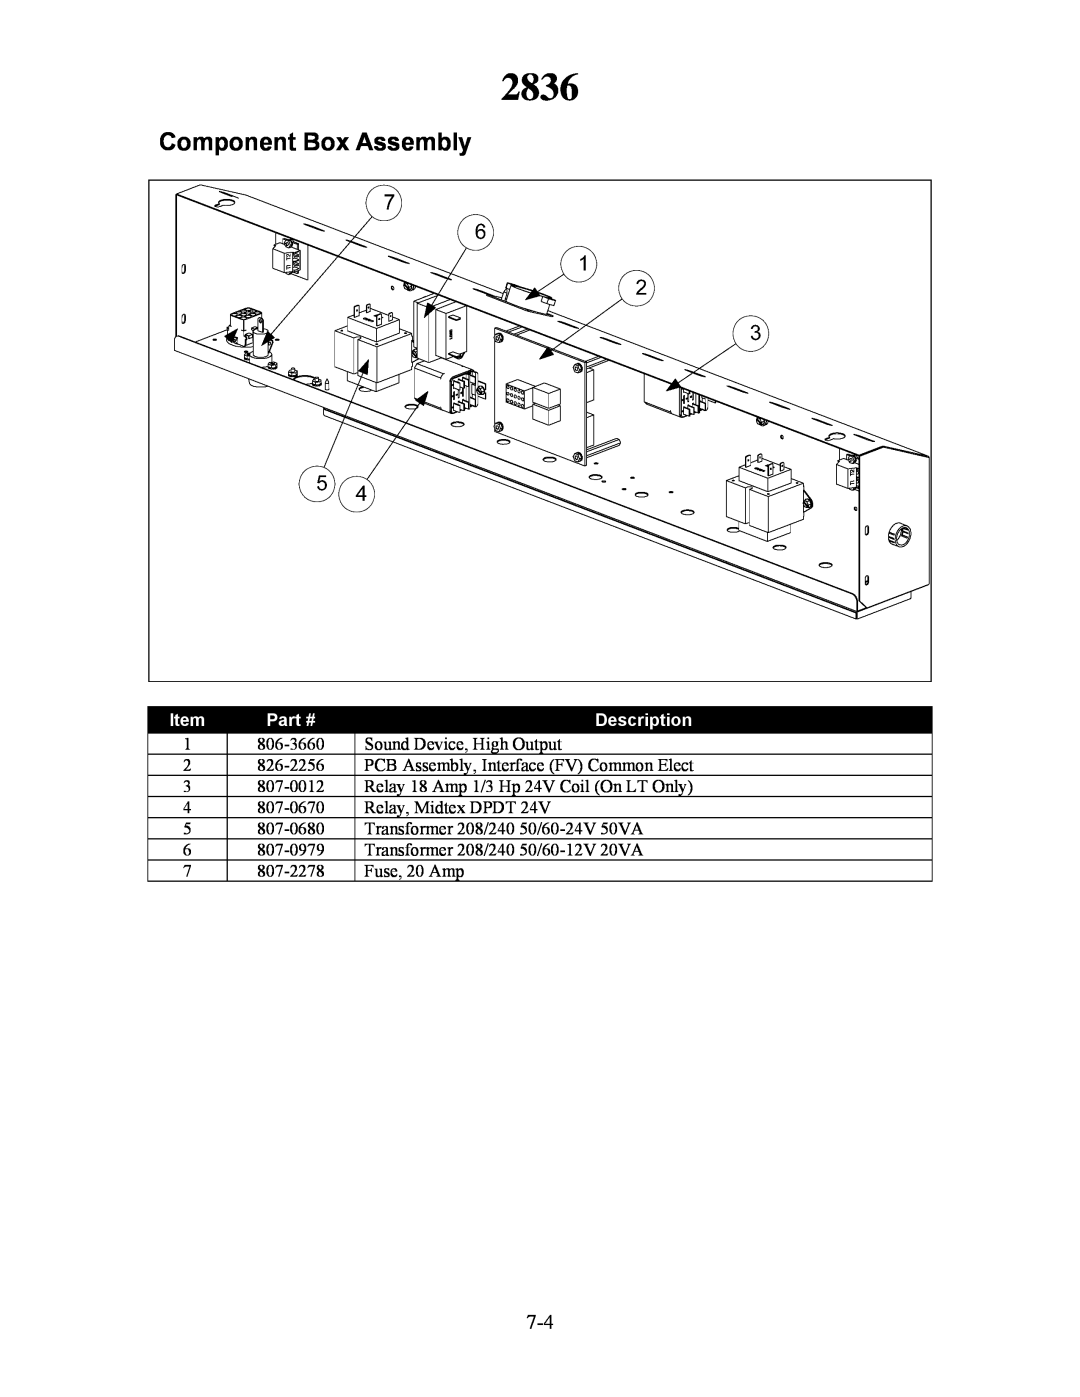 Frymaster H55 manual Component Box Assembly, 2836, Description 